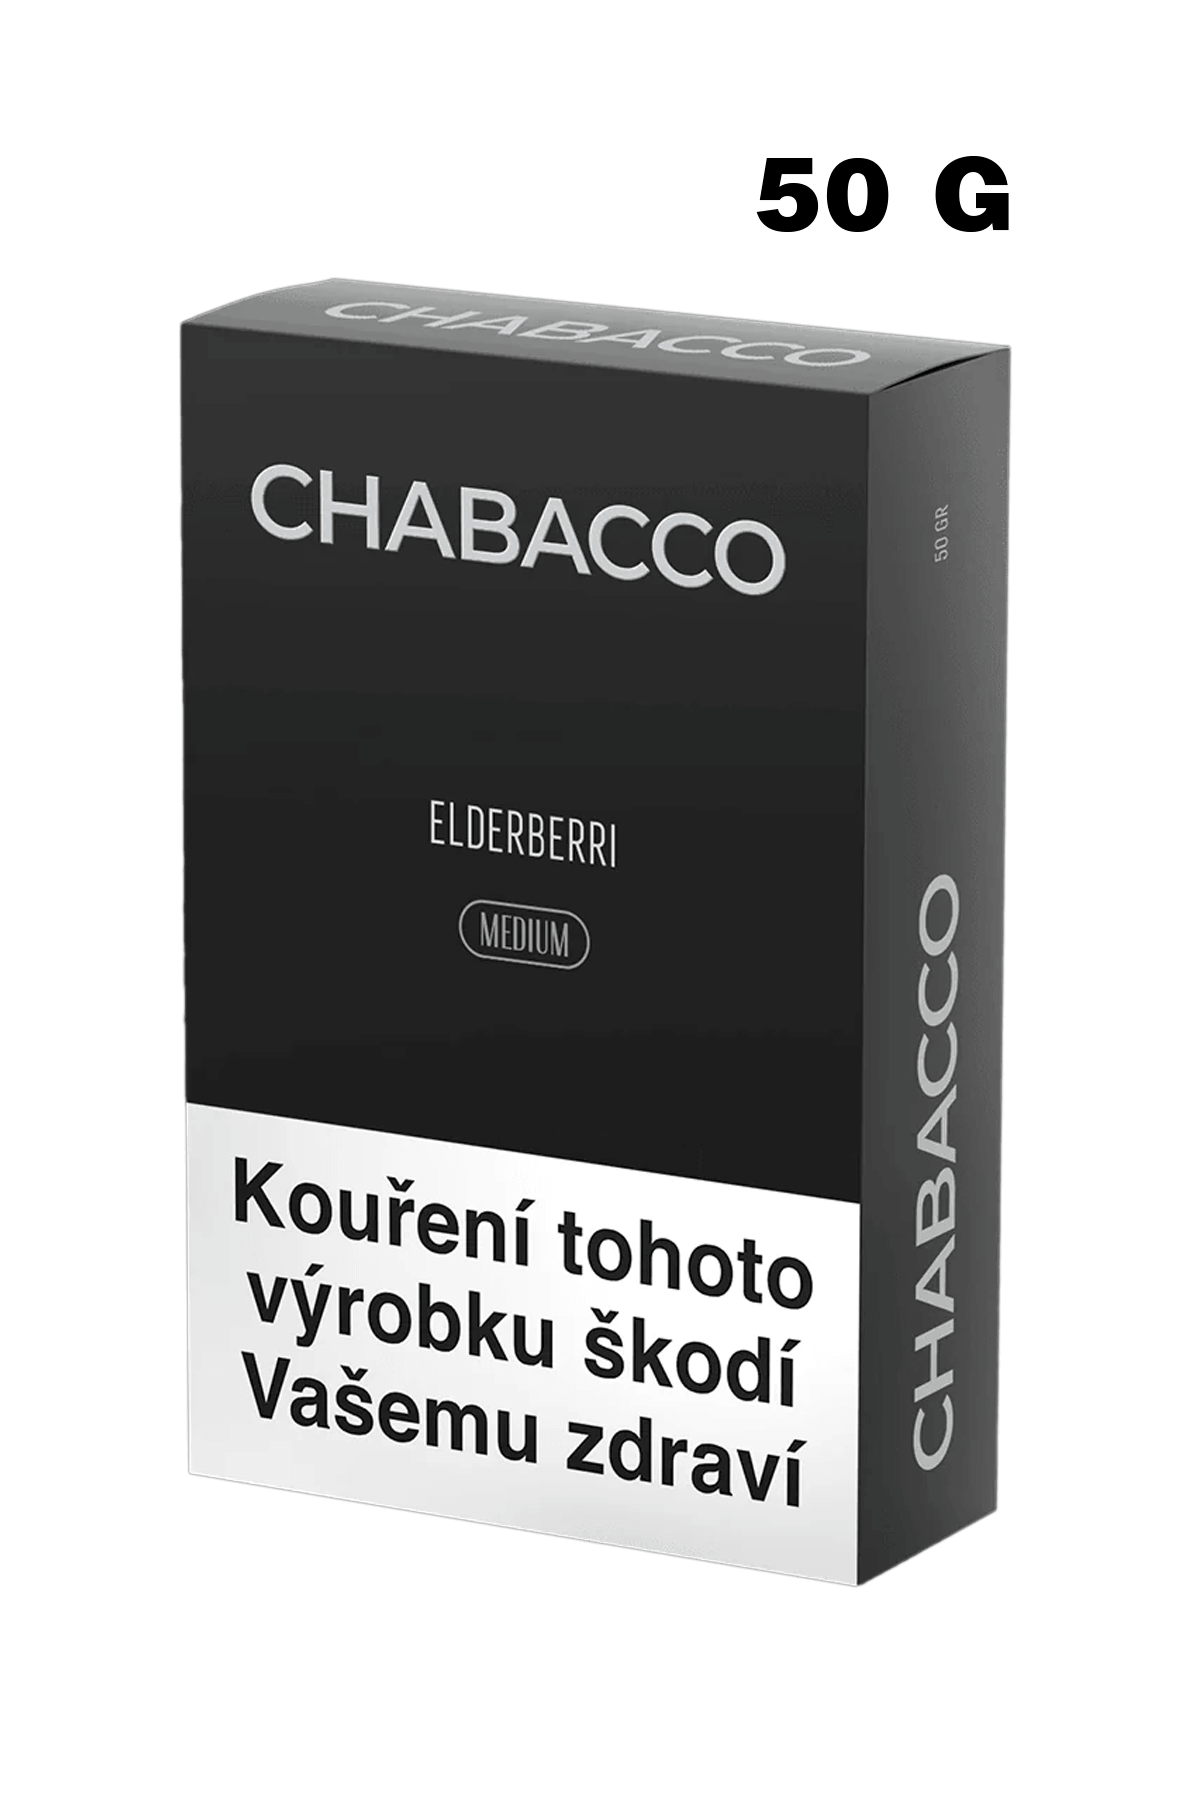 Tobacco - Chabacco Medium 50g - Elderberri